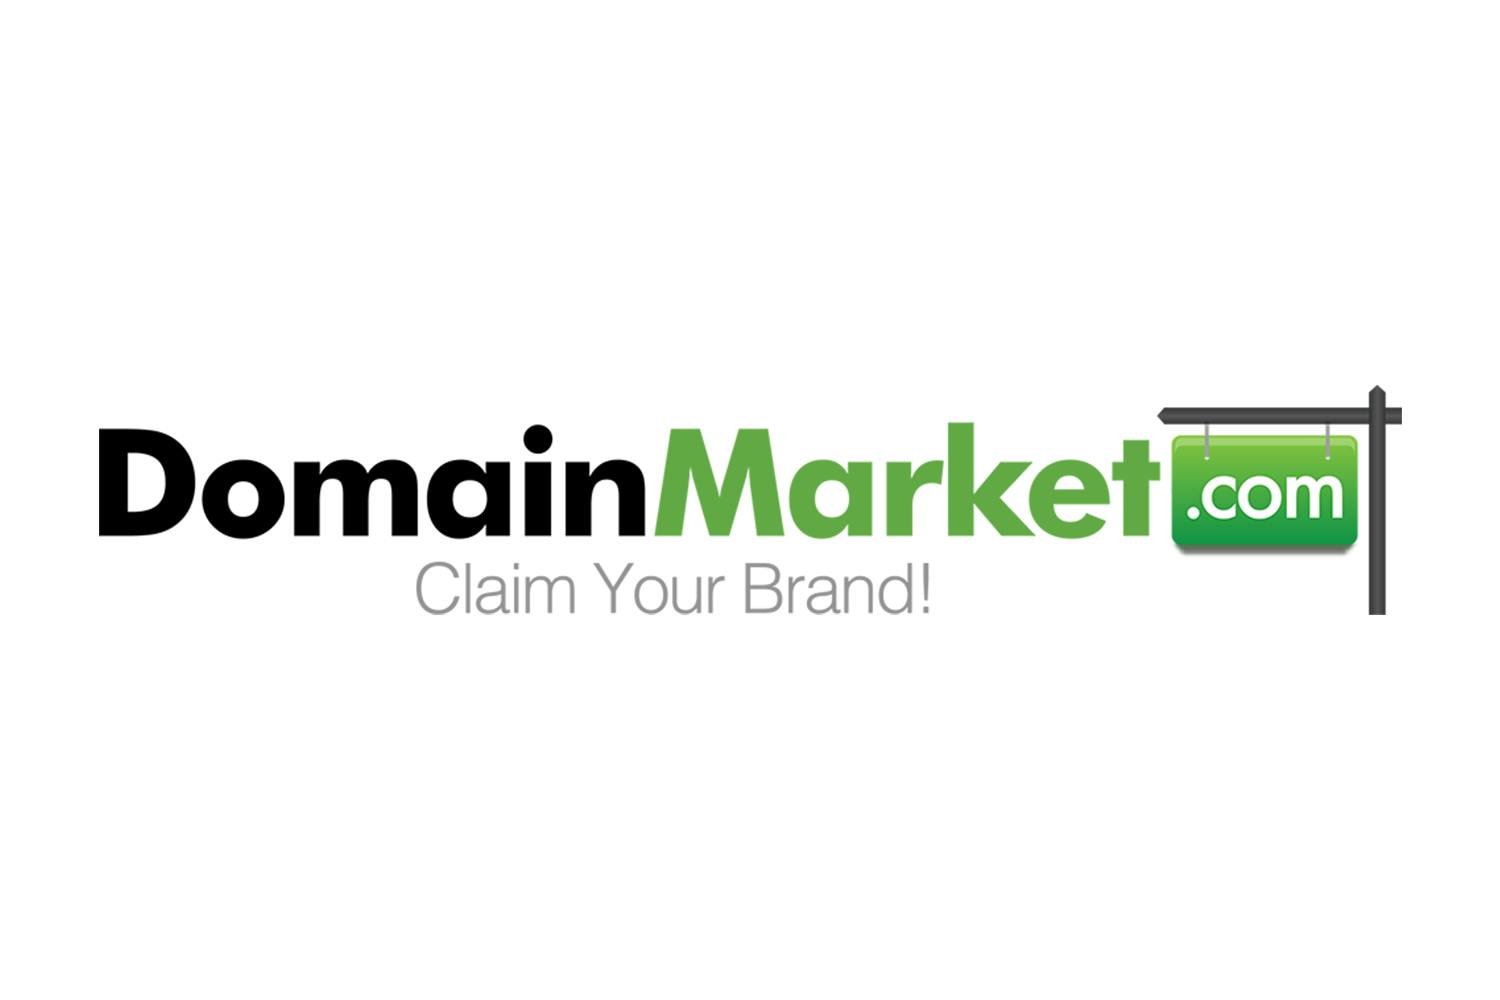 DomainMarket.com, Claim Your Brand!